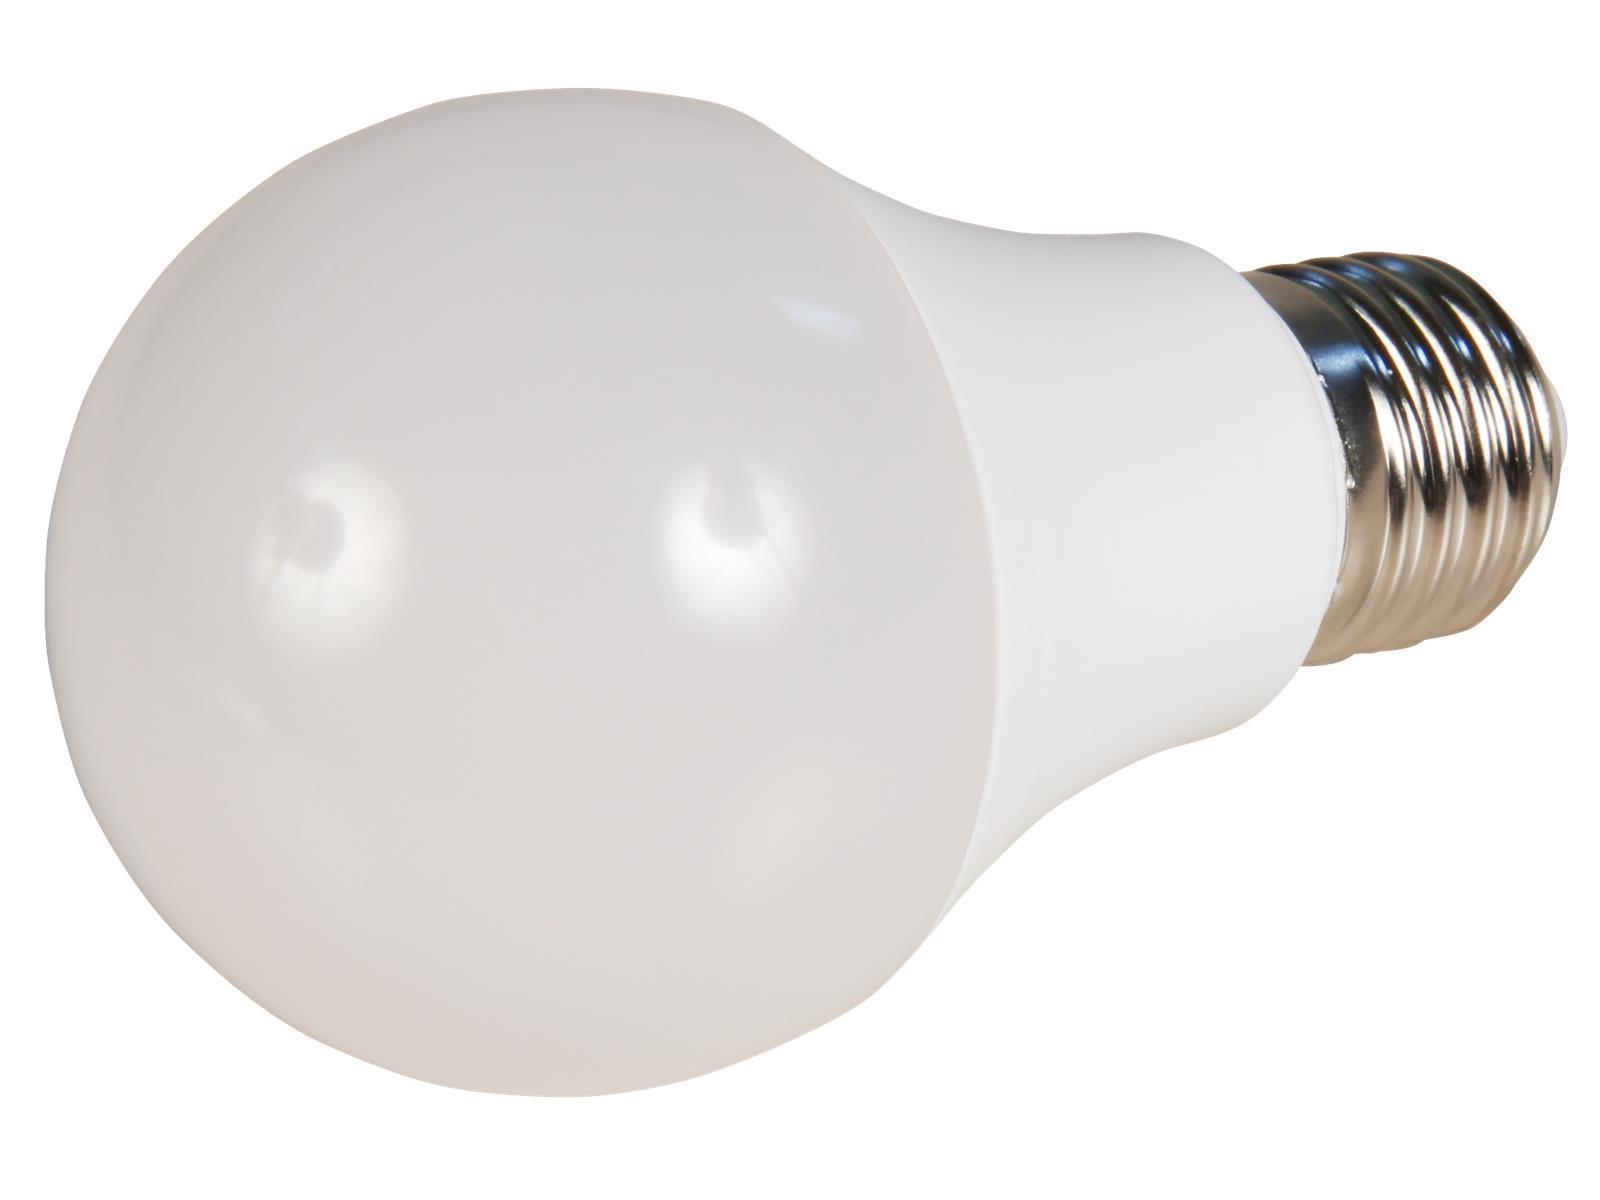 LED Glühlampe Premium, E27, 15W, 1550lm, 220°, 4000K, neutralweiß, Ø60x118mm